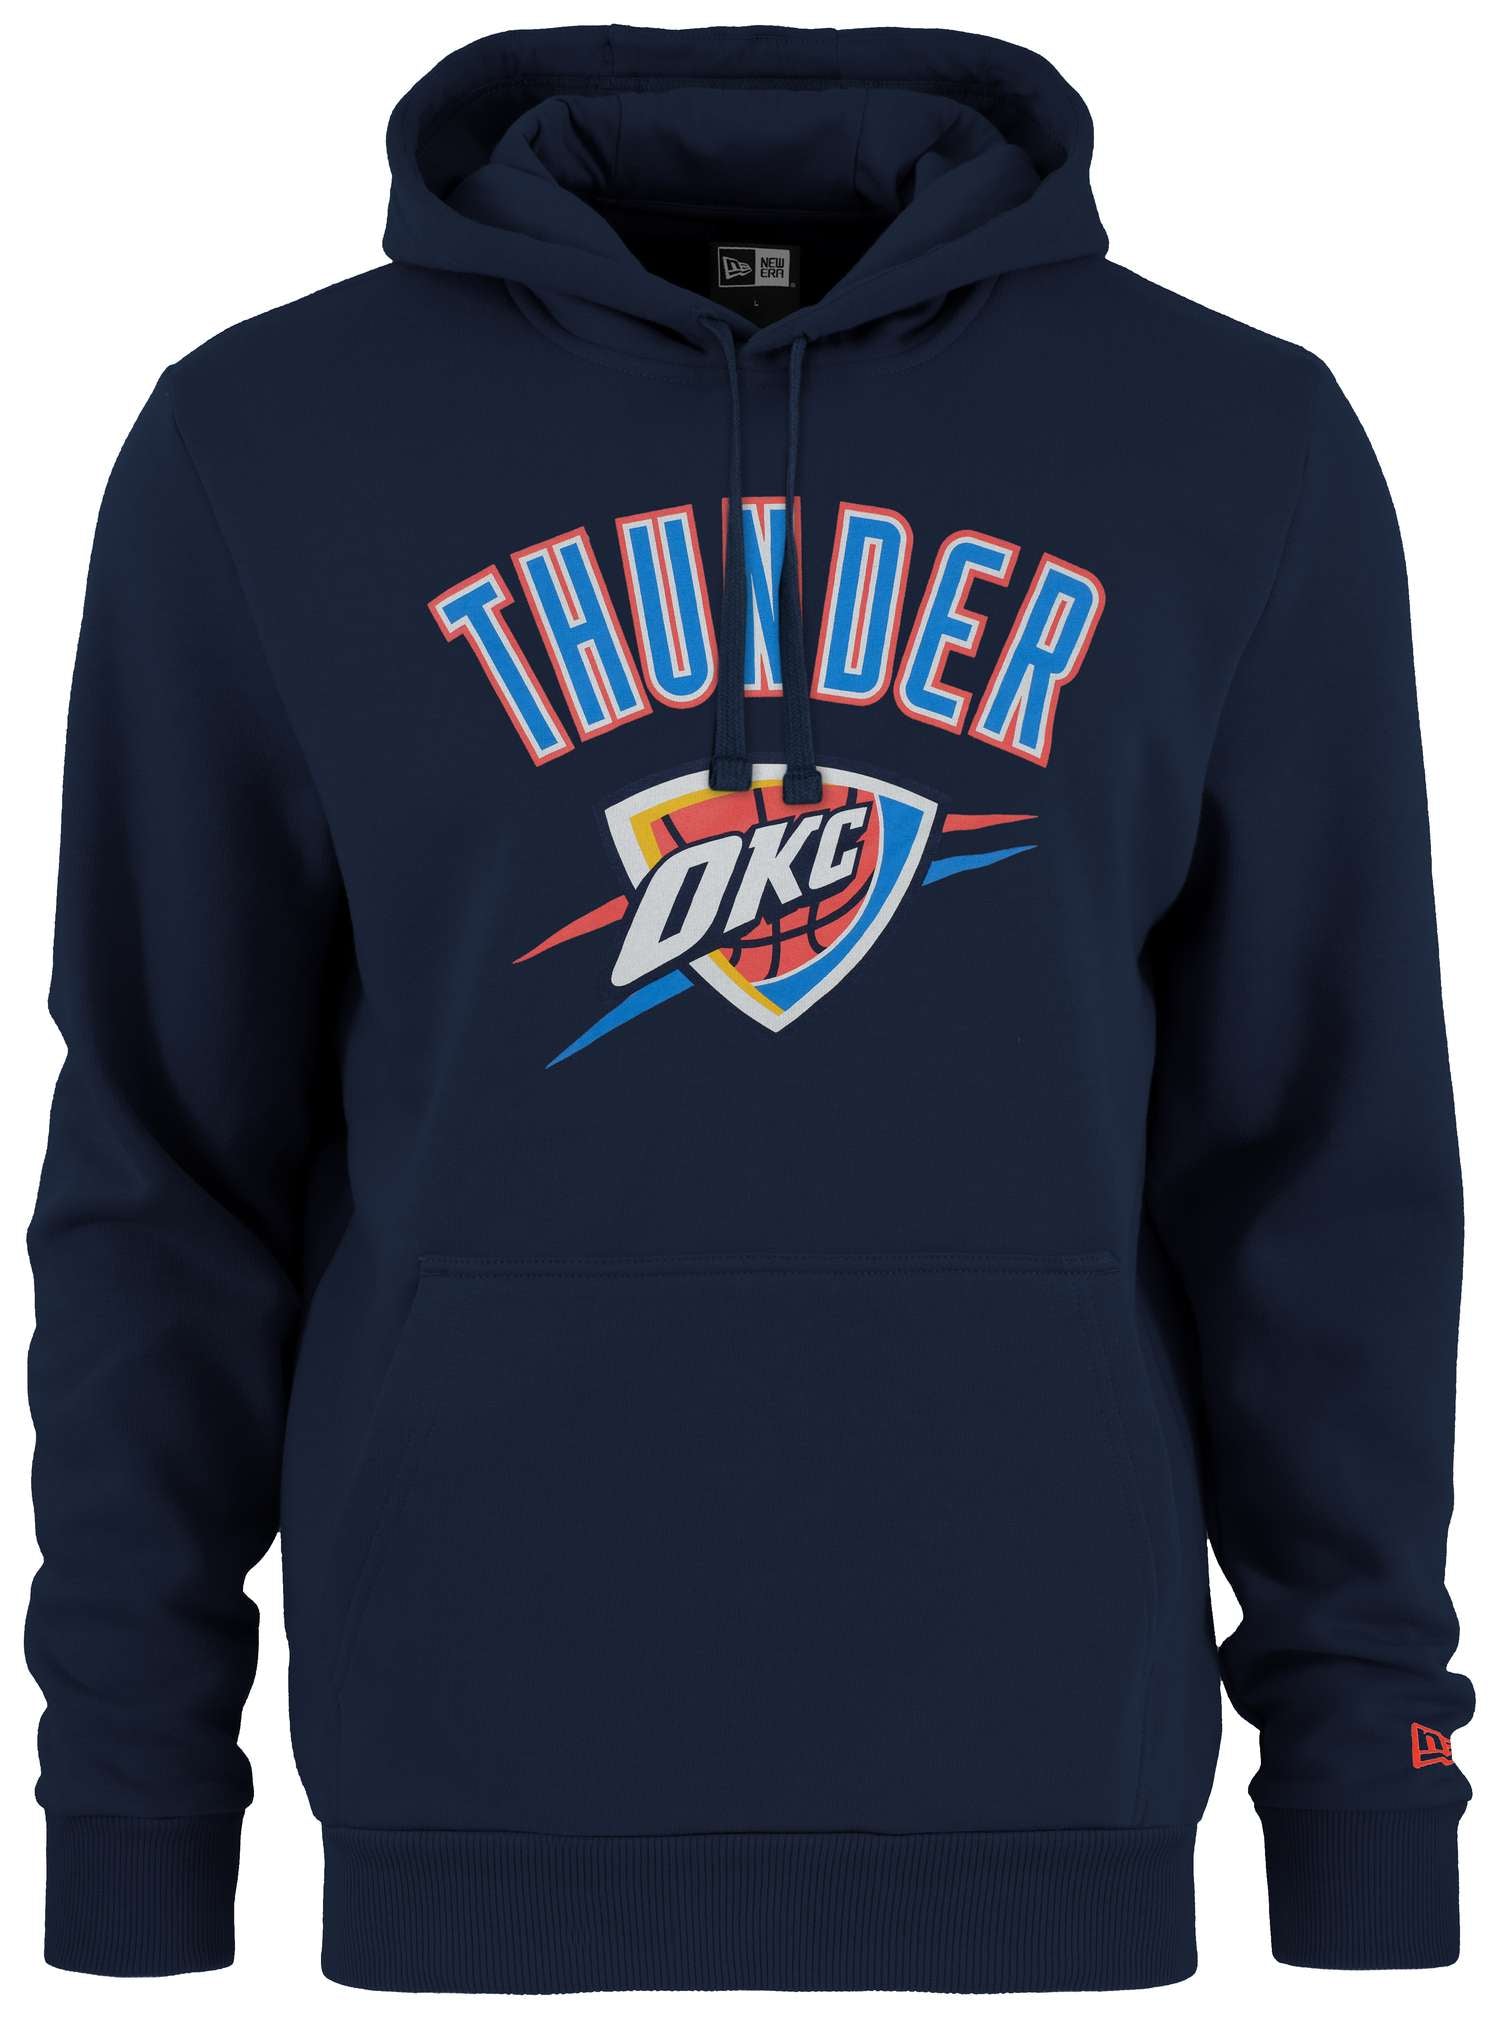 New Era - NBA Oklahoma City Thunder Team Logo Hoodie - Blau